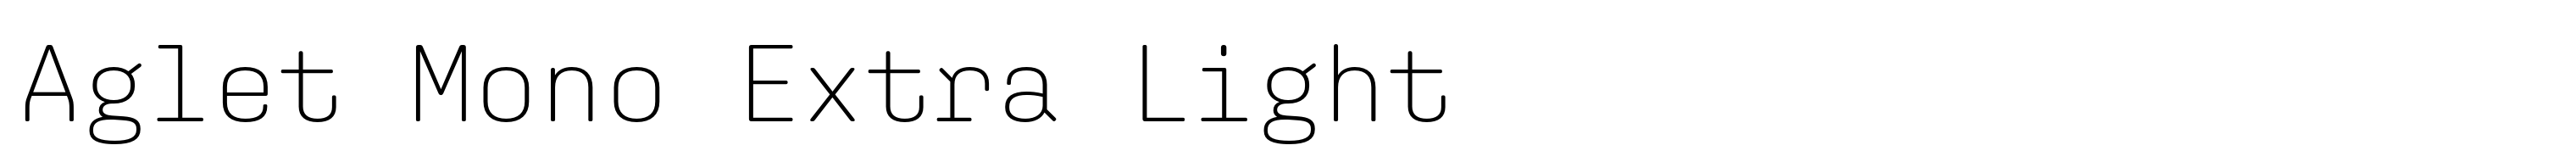 Aglet Mono Extra Light